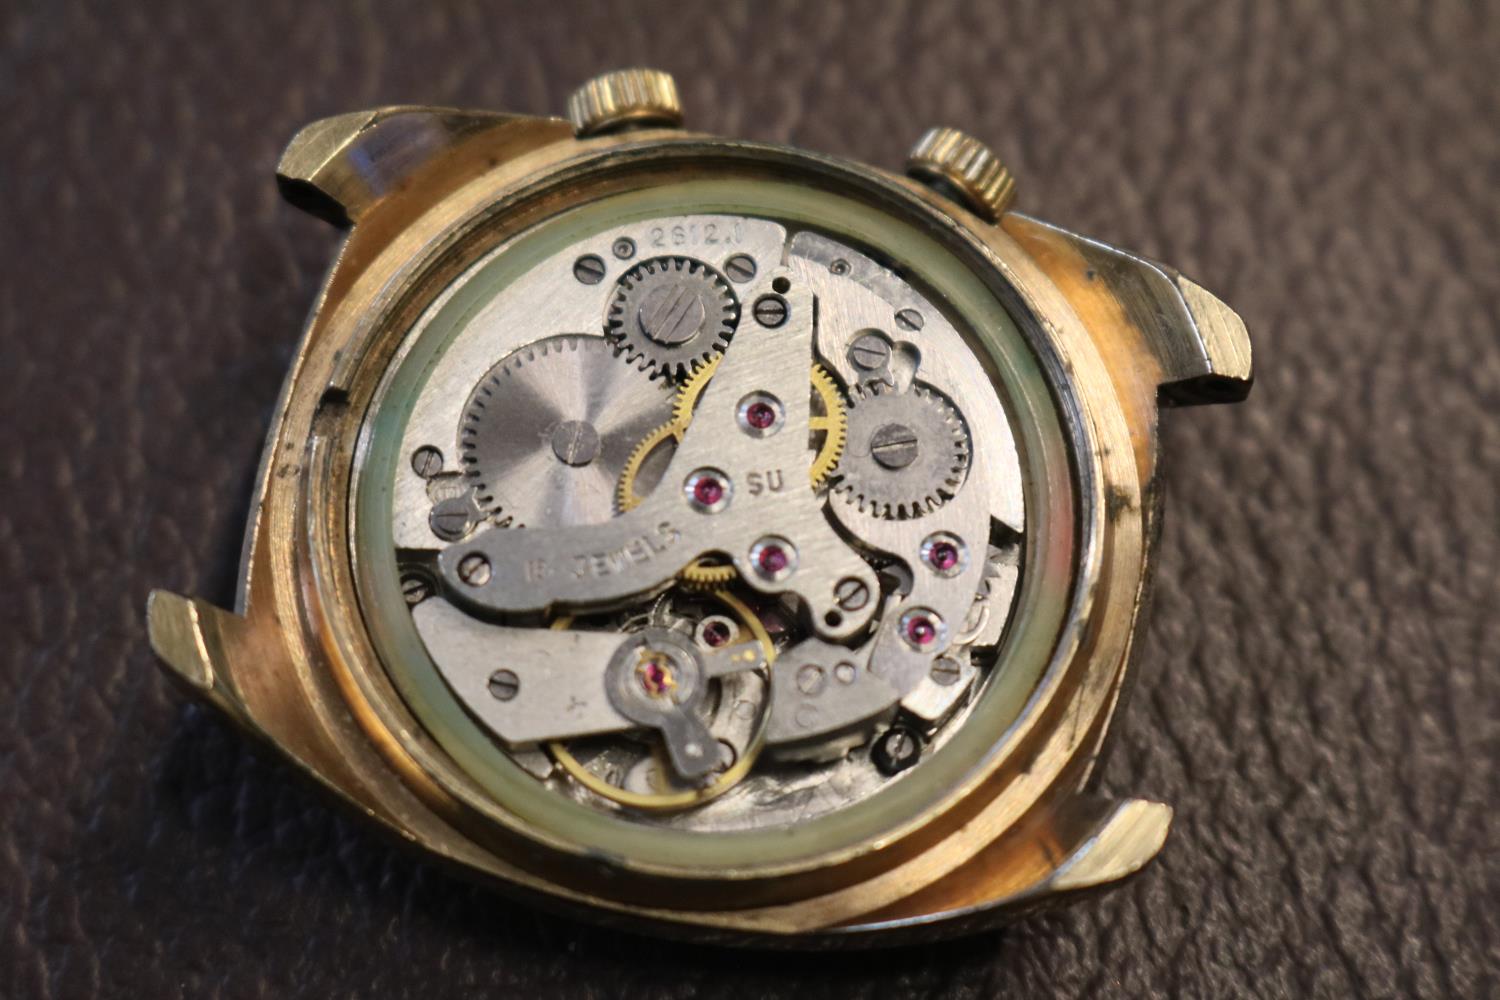 Vintage Russian Poljot watch, Ingersoll drivers watch & a an Alfred Bell of Wisbech pocket watch - Image 4 of 6